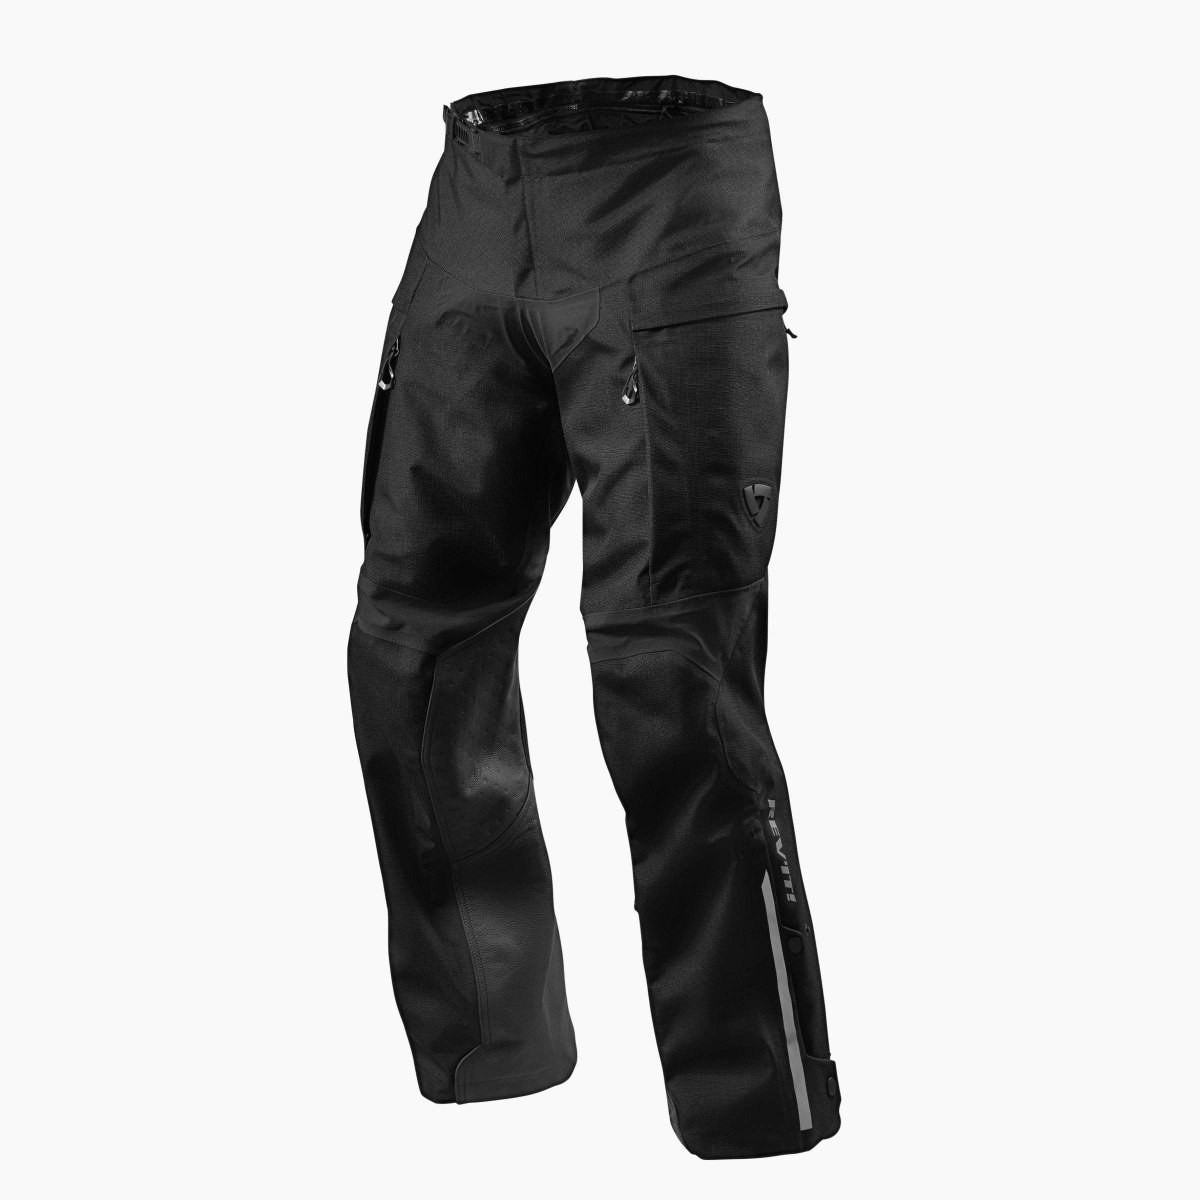 Image of REV'IT! Component H2O Long Black Motorcycle Pants Size L EN